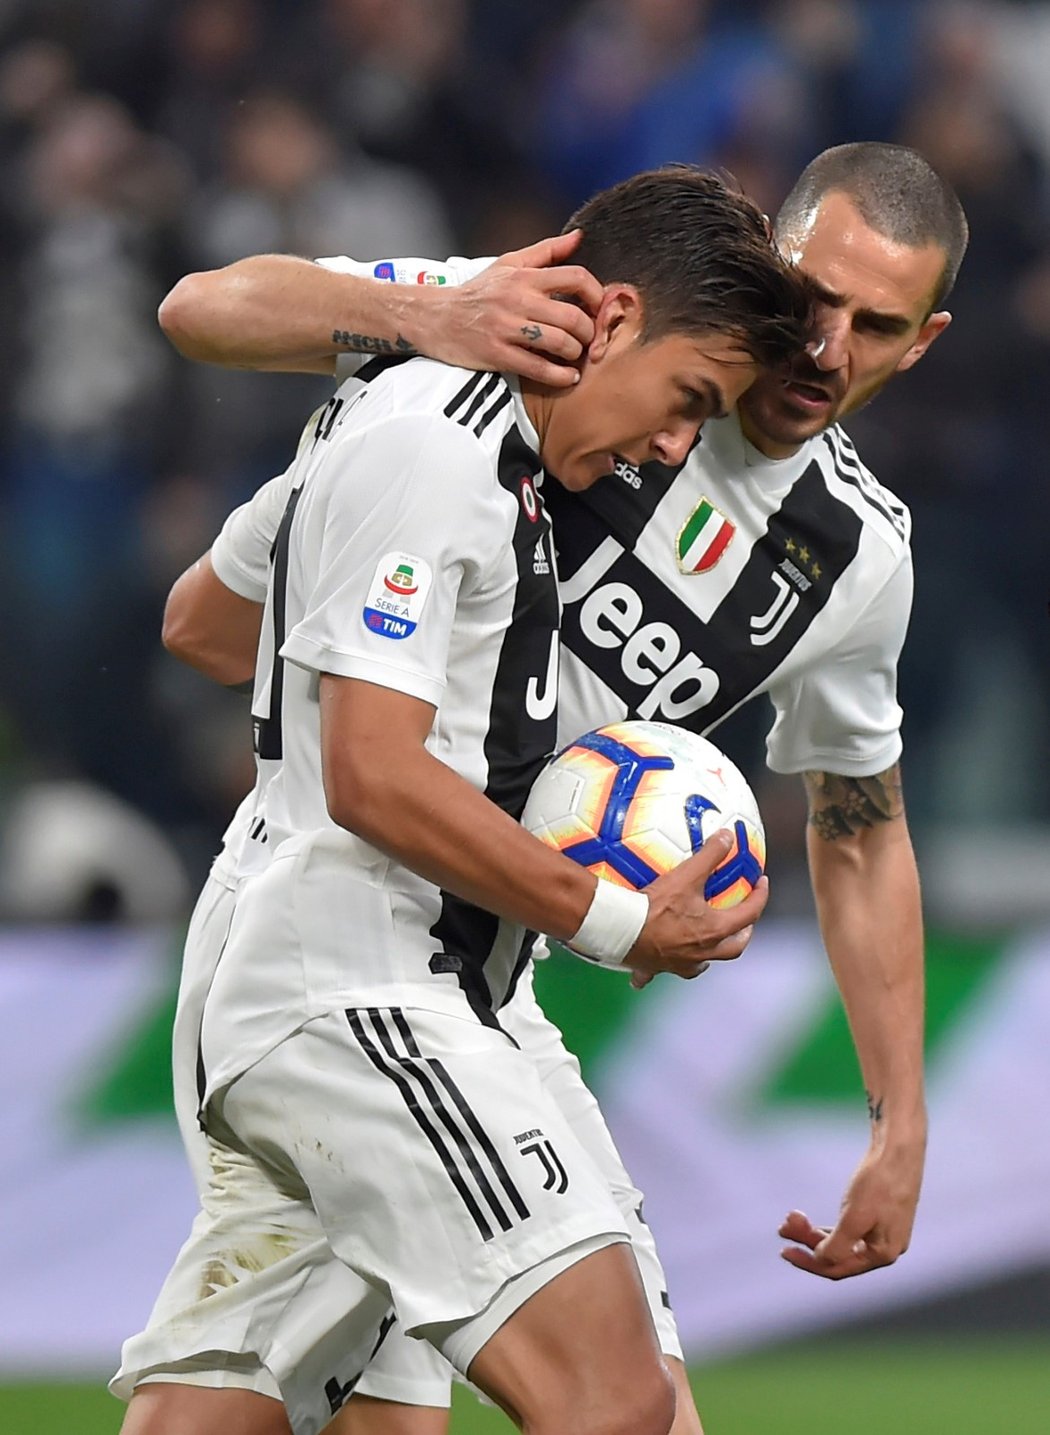 Fotbalisté Juventusu Paulo Dybala a Leonardo Bonucci po vyrovnávacím gólu do sítě AC Milán